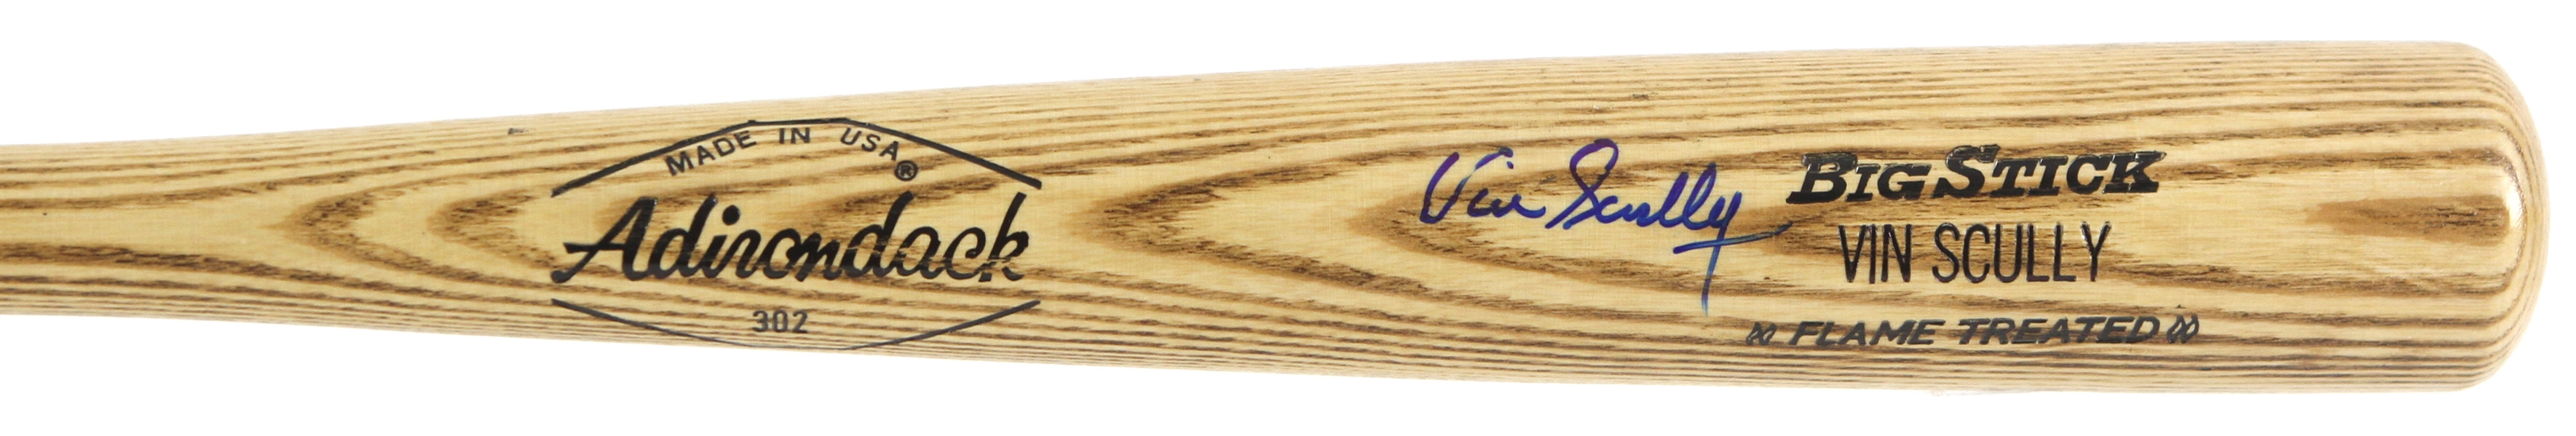 1971-79 Vin Scully Los Angeles Dodgers Signed Adirondack Bat (JSA)